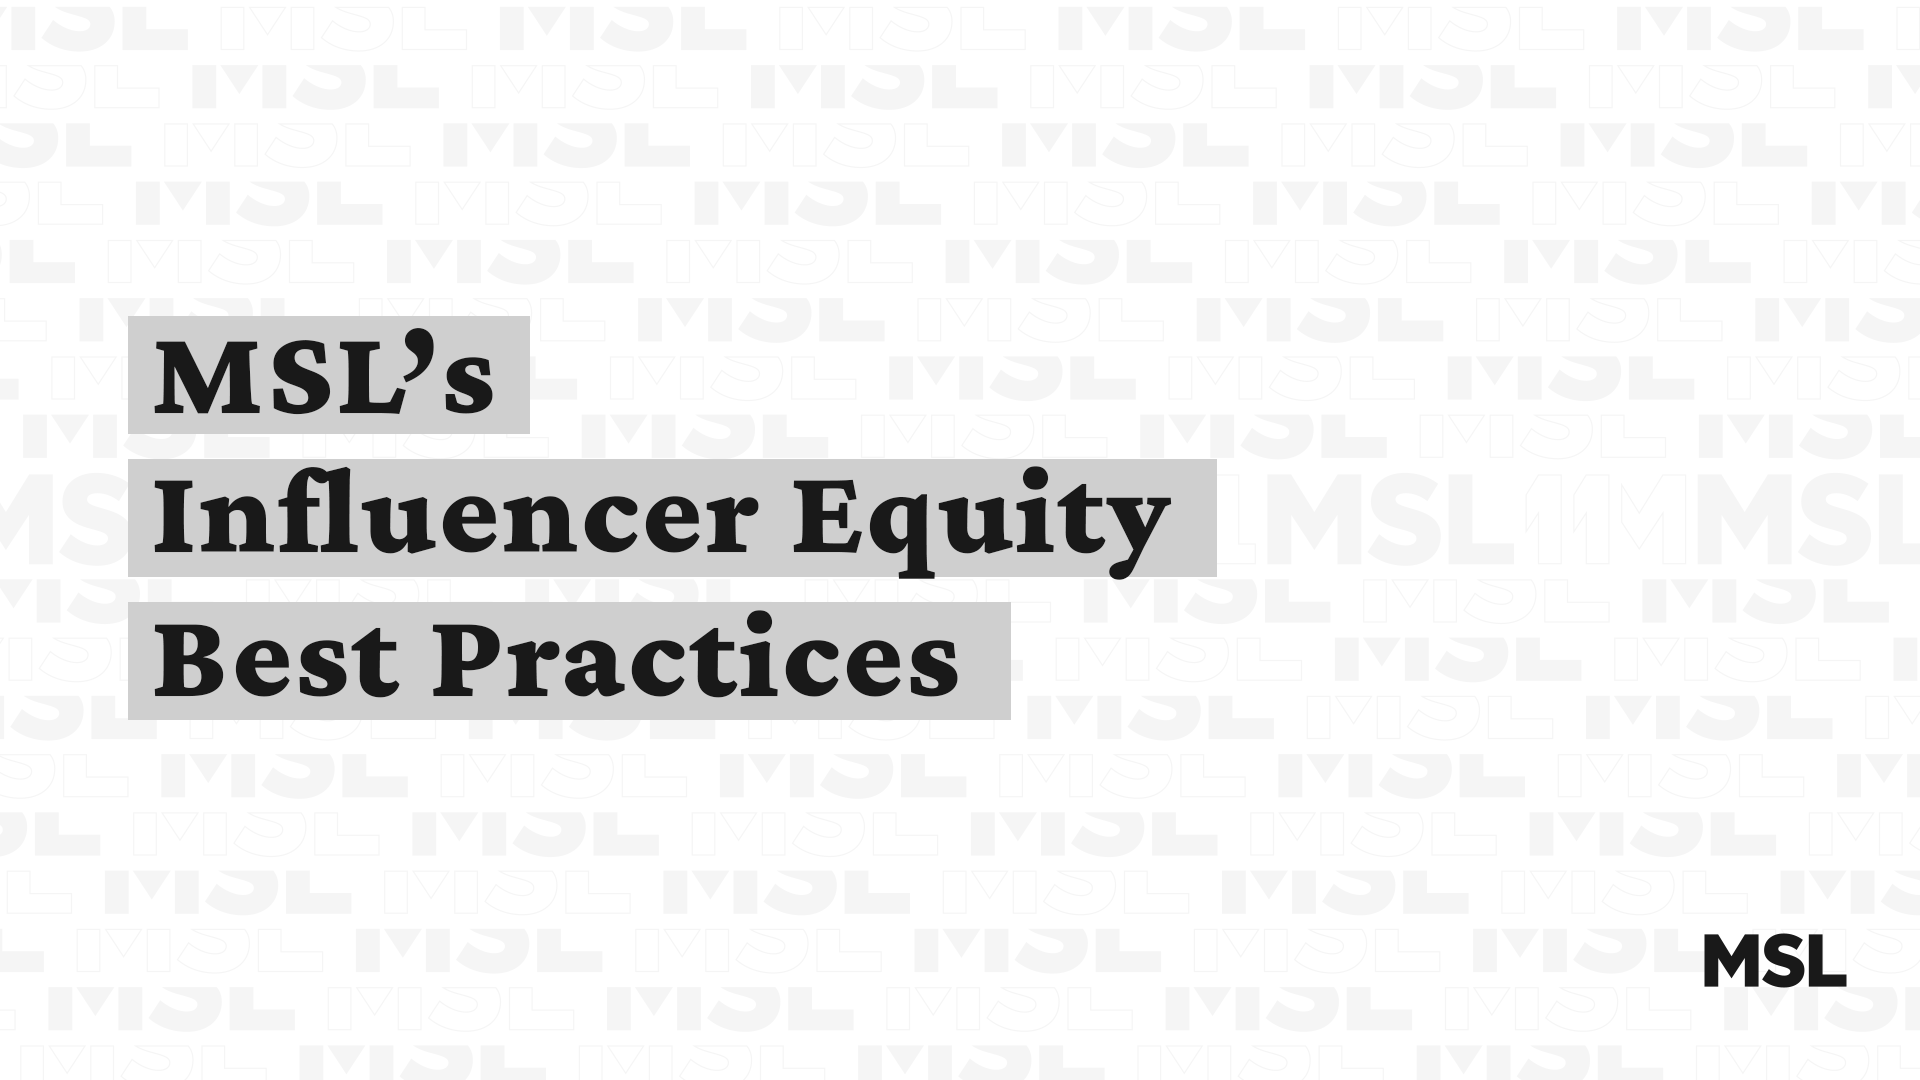 msl's influencer equity best practices